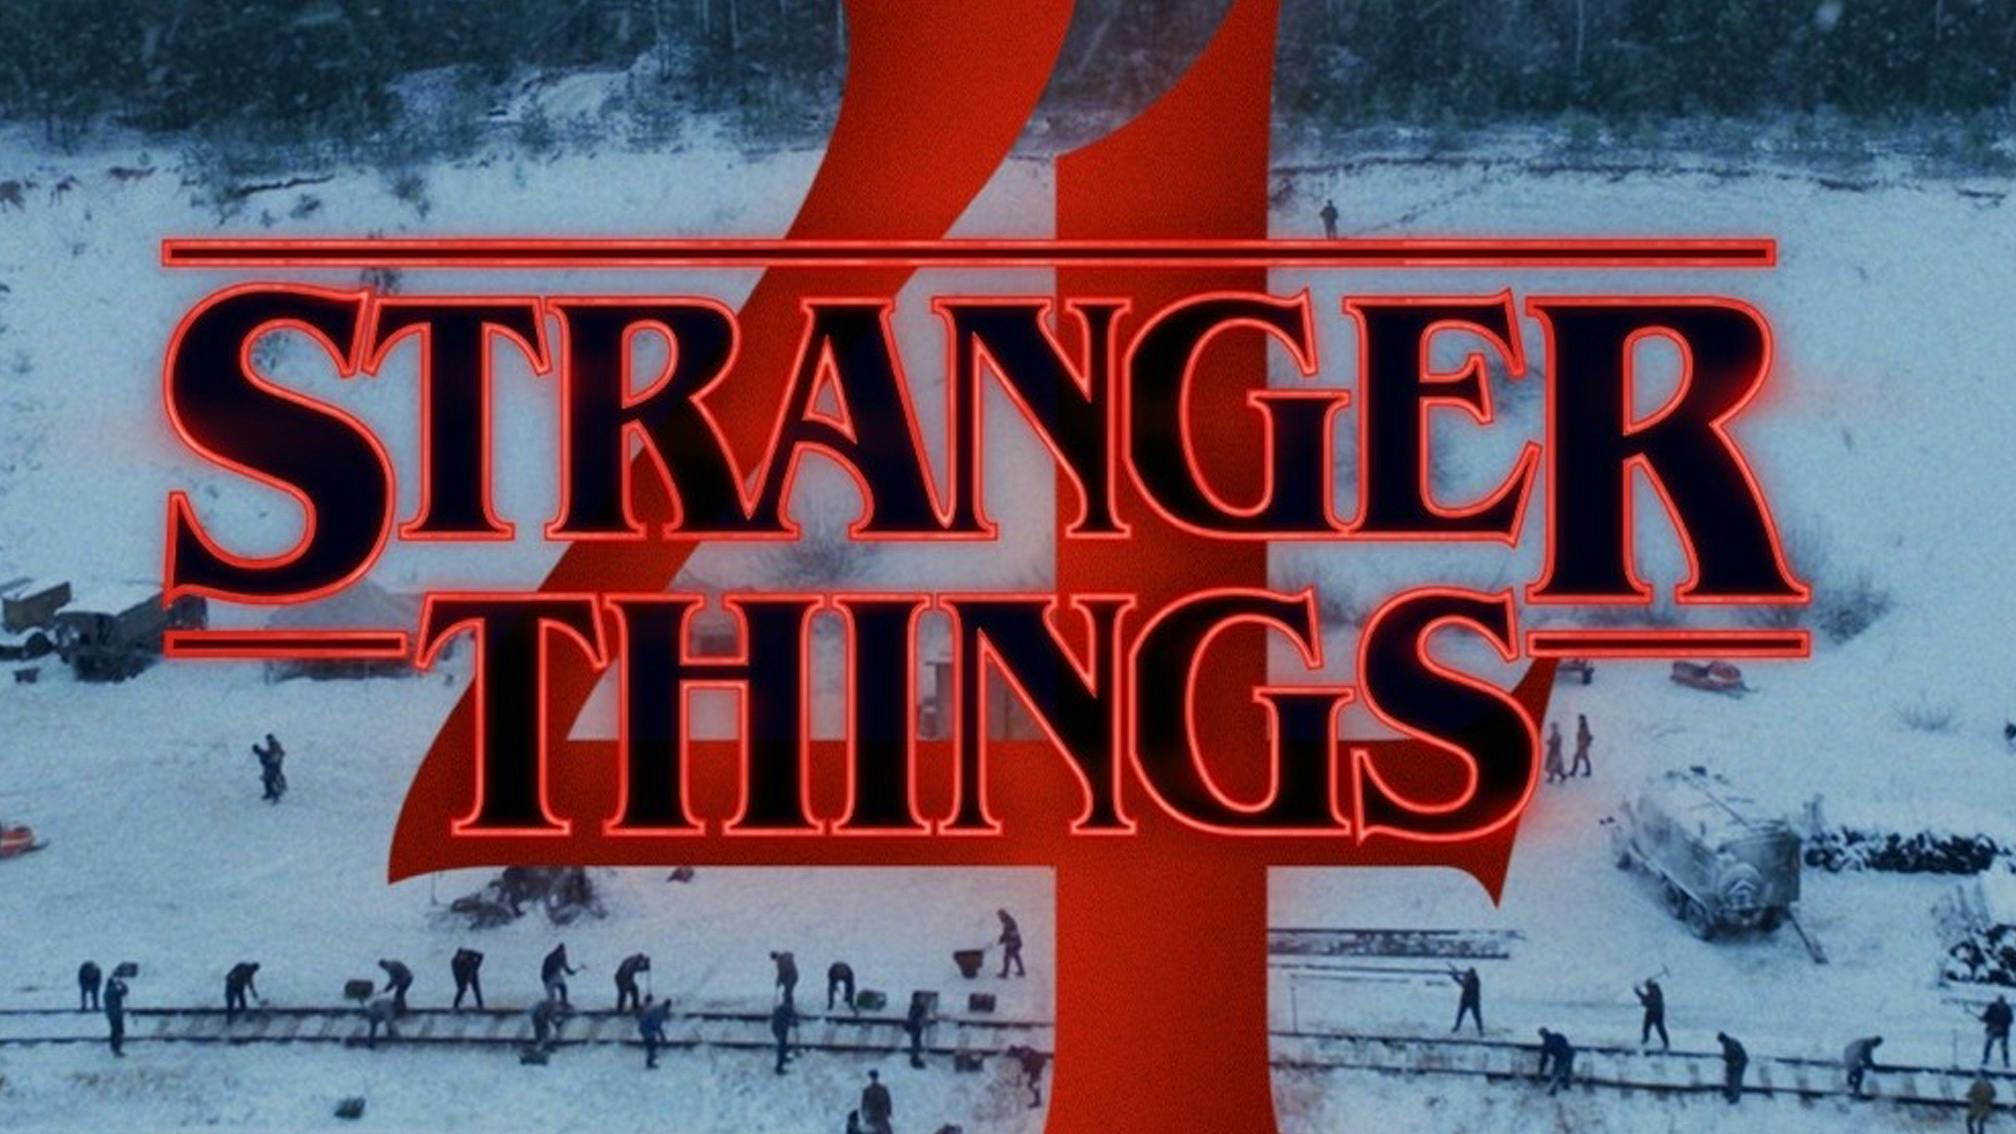 Production On Stranger Things 4 Postponed As Part Of Netflix Shutdown Due To Coronavirus